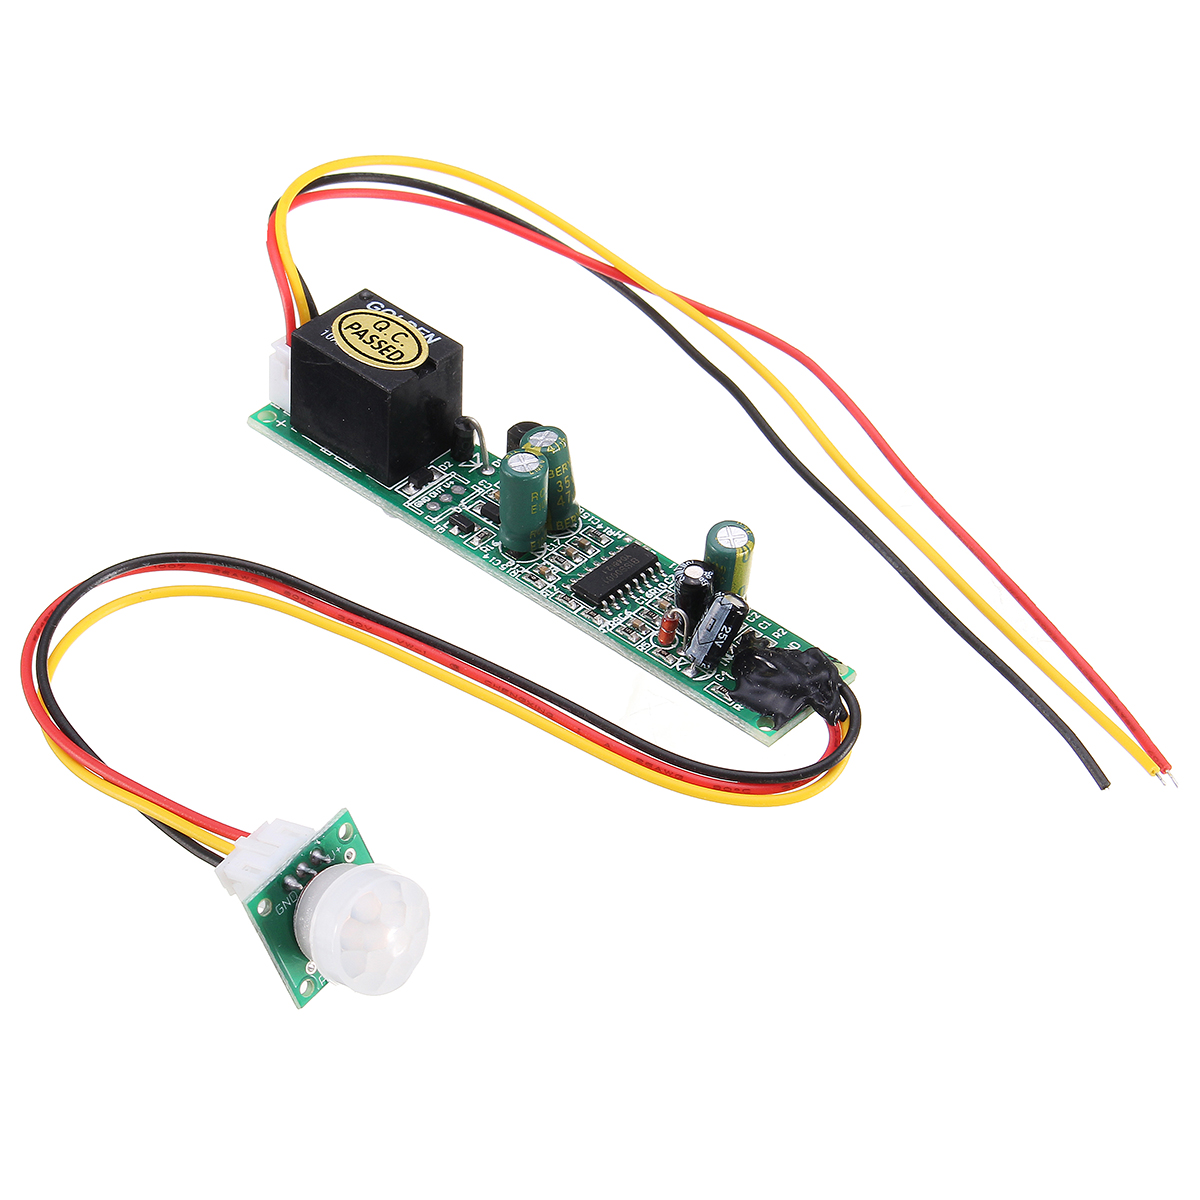 

5pcs DC 12V 5A IR Pyroelectric Infrared PIR Motion Sensor Detector Light Module